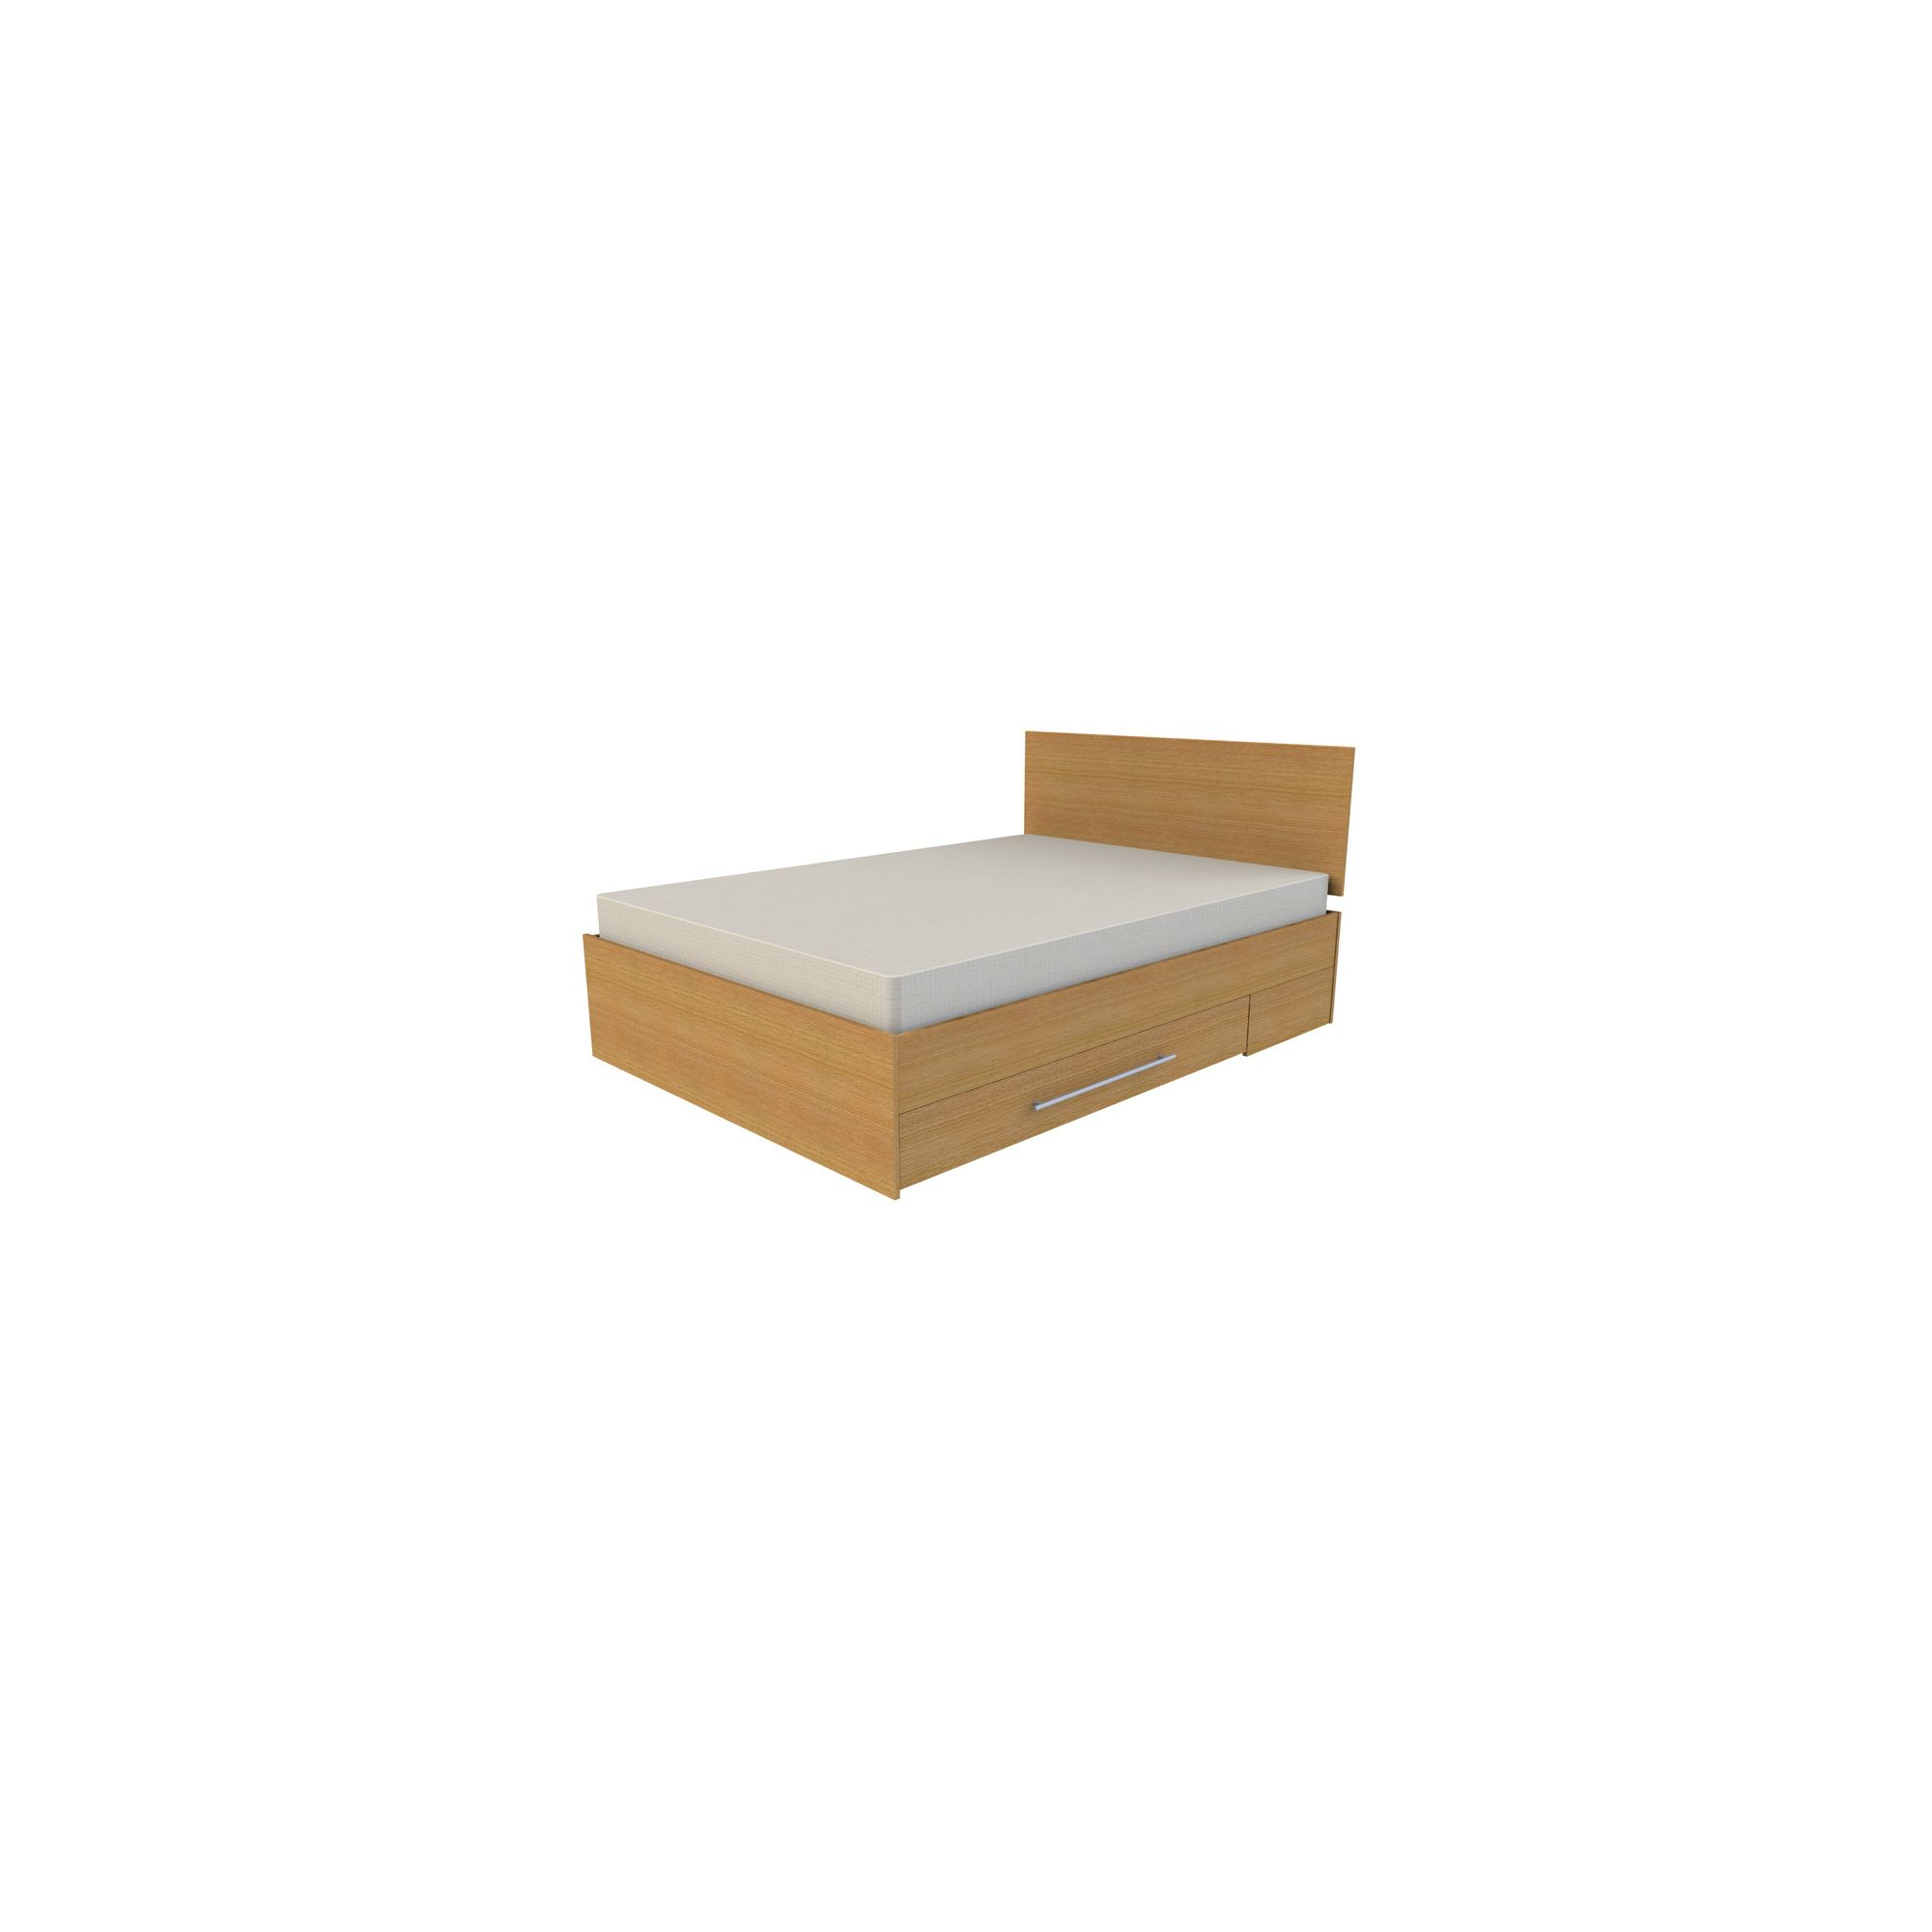 Ashcraft Modular Storage Double Bed - Oak at Tesco Direct